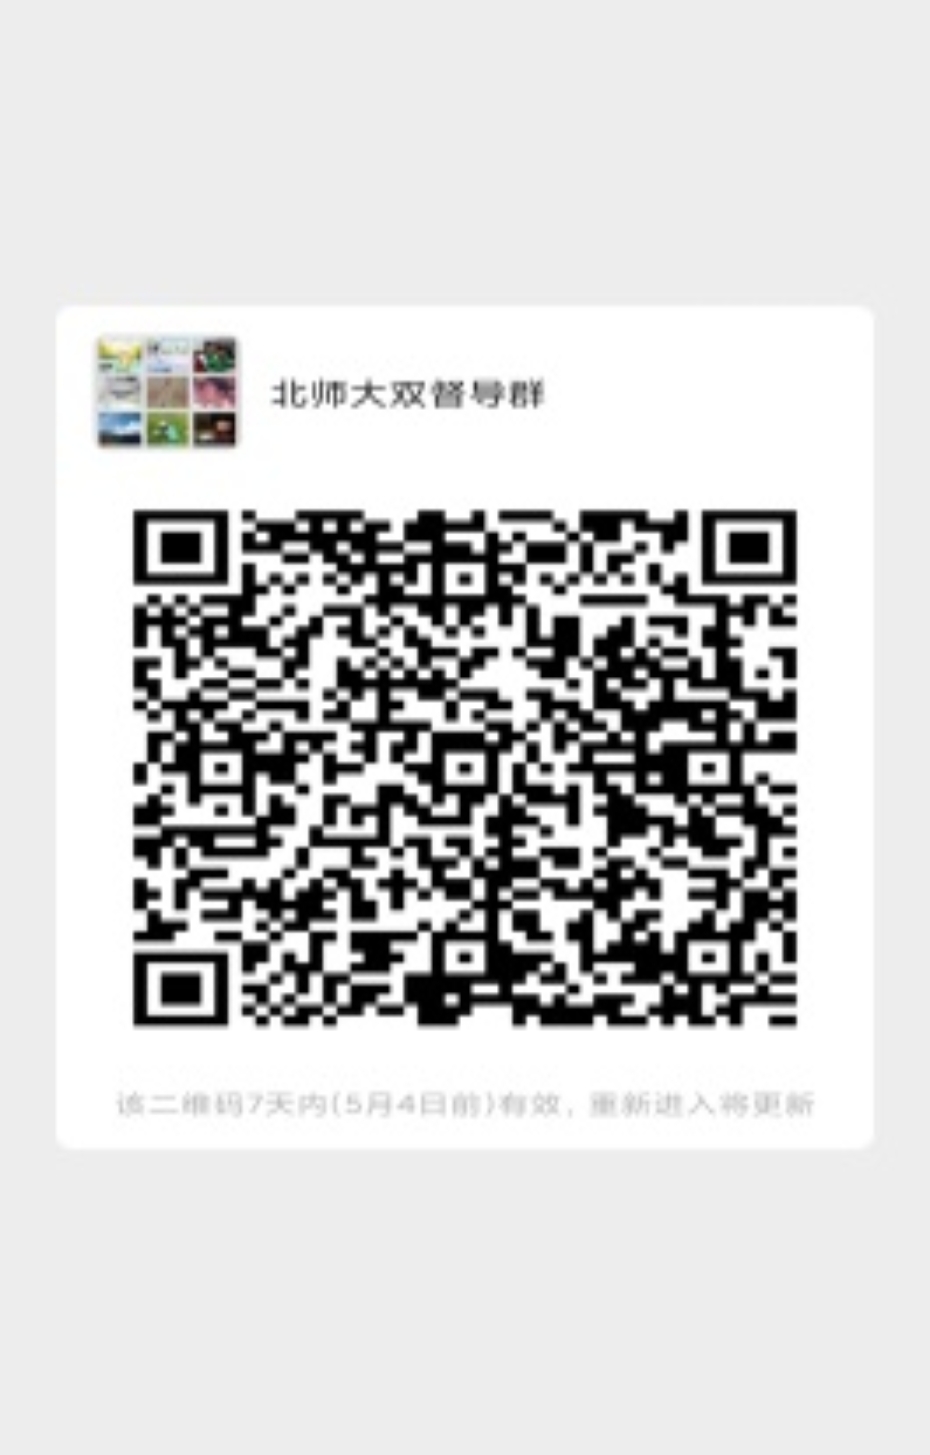 C:\Users\user\AppData\Local\Temp\WeChat Files\b8f806b7fa4eb80b86ac4fef2876d62.jpg